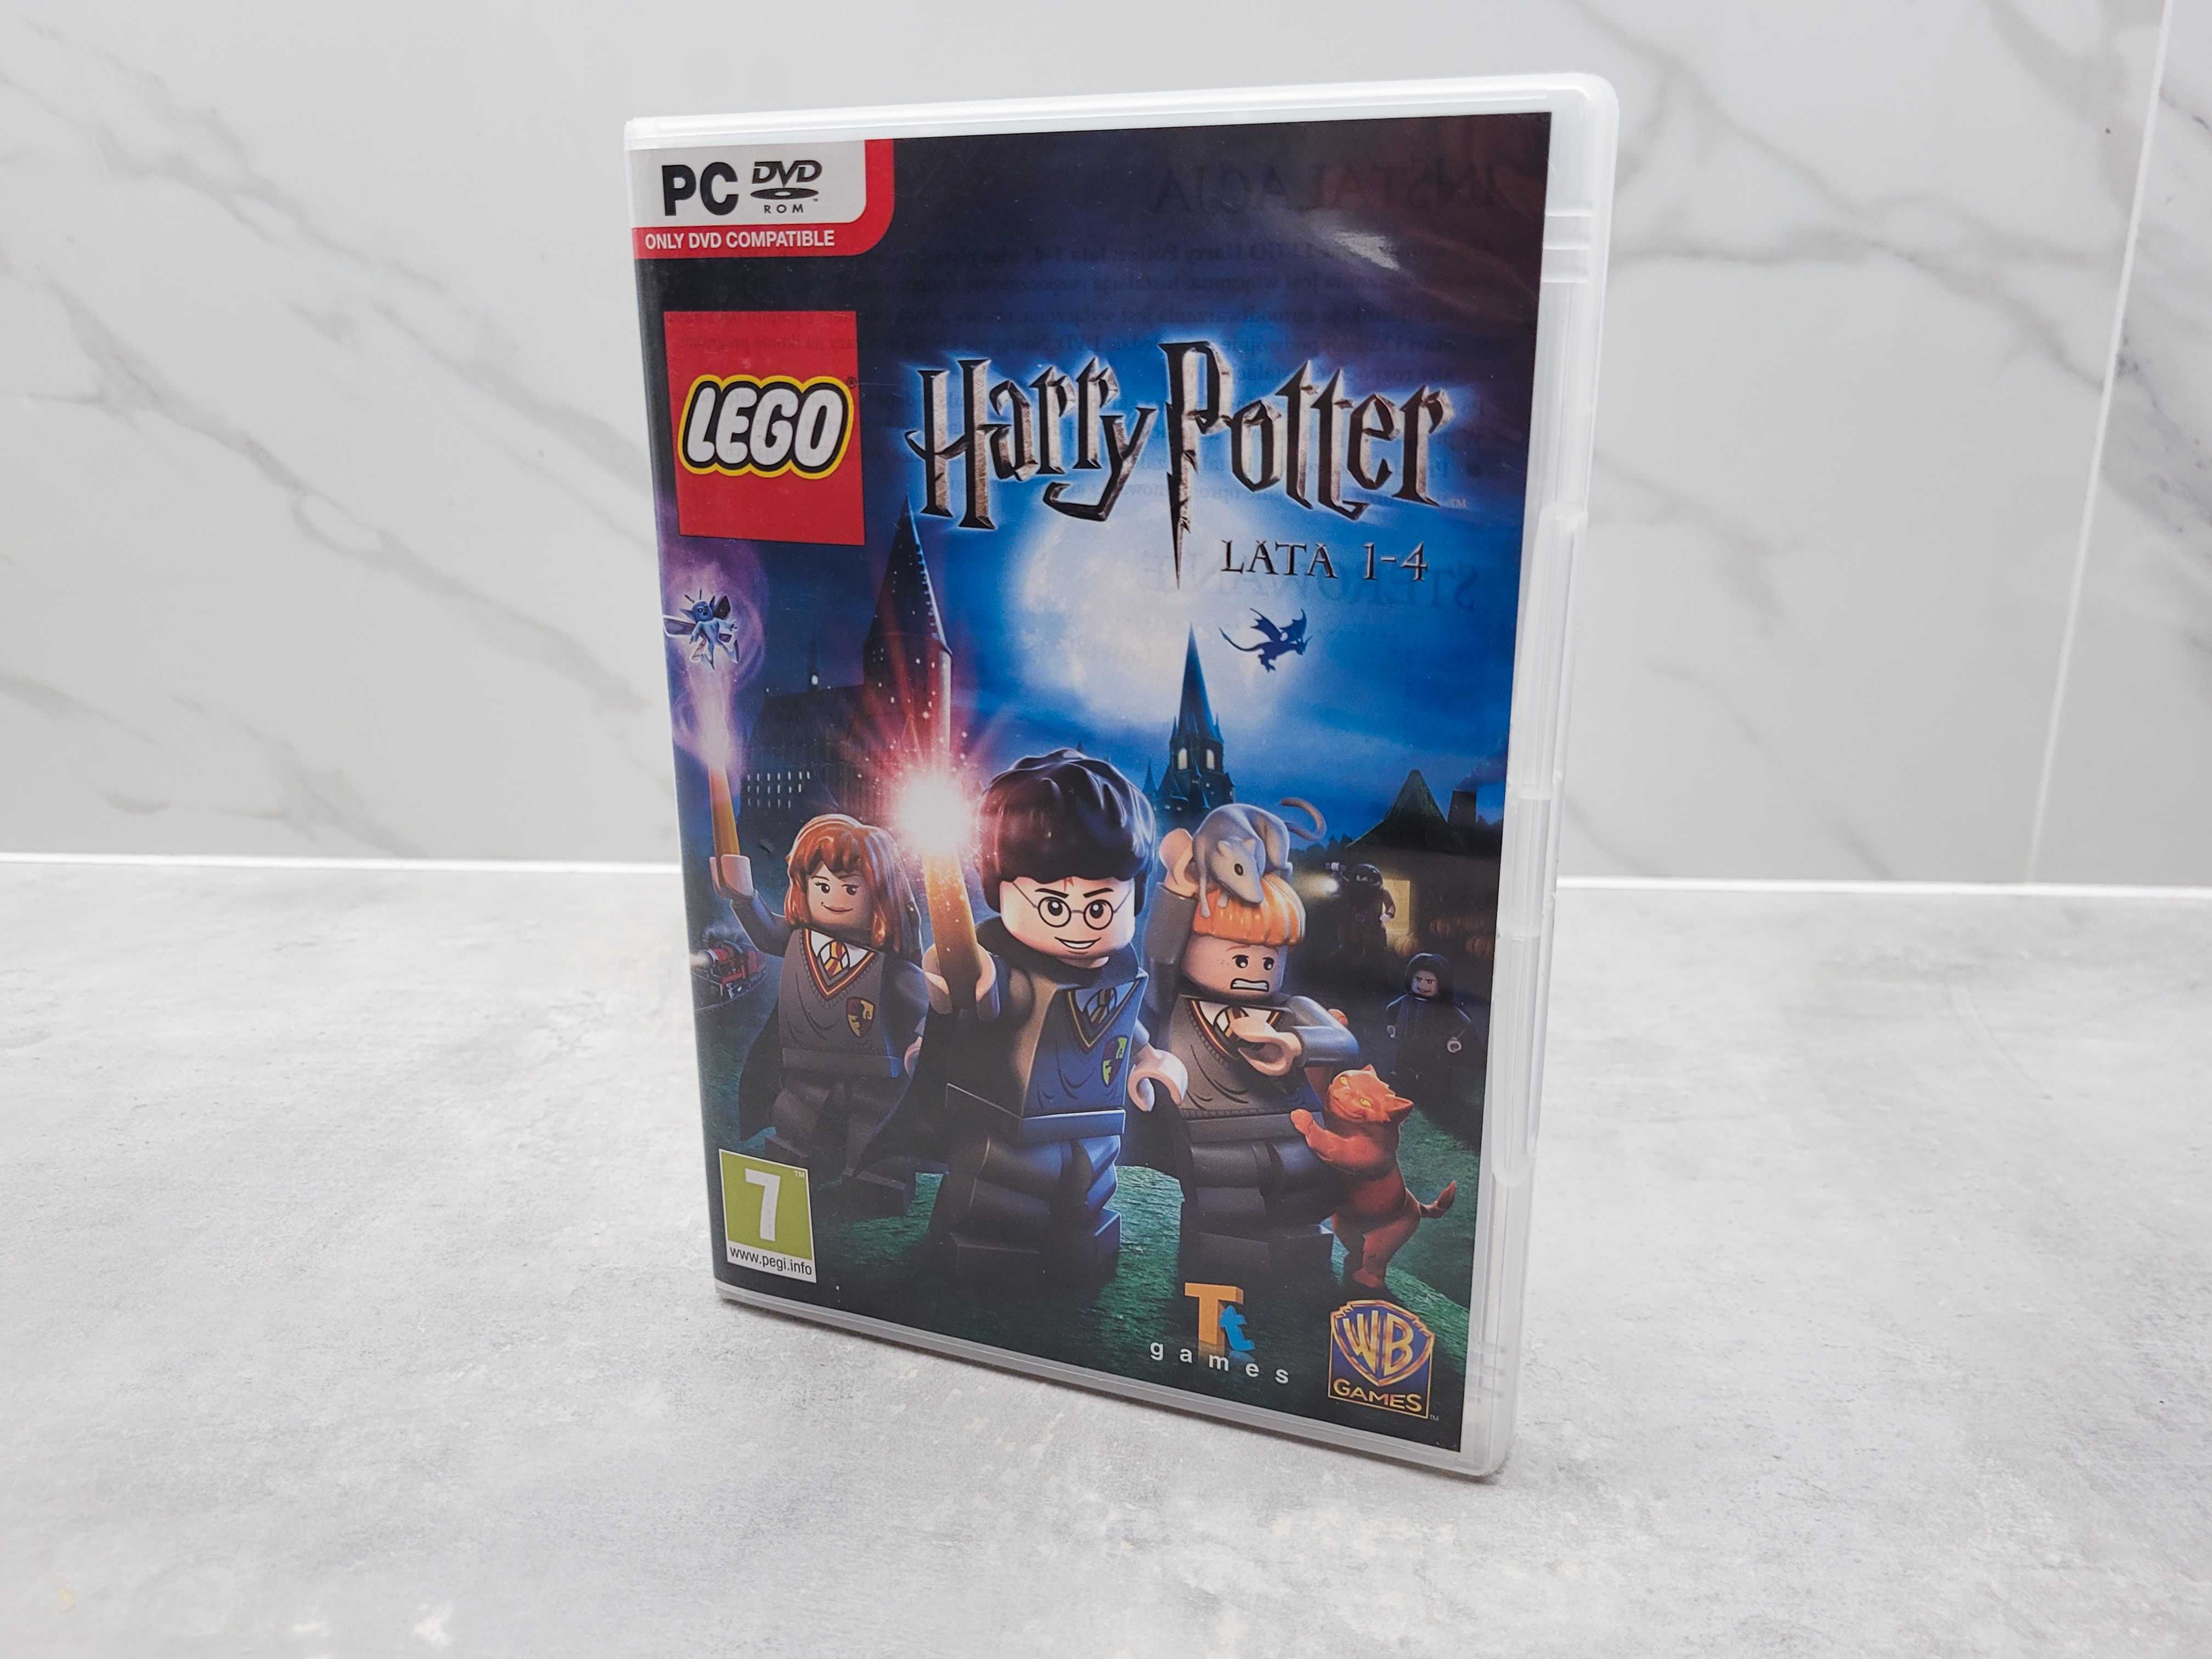 Gra LEGO Harry Potter Windows PC DVD